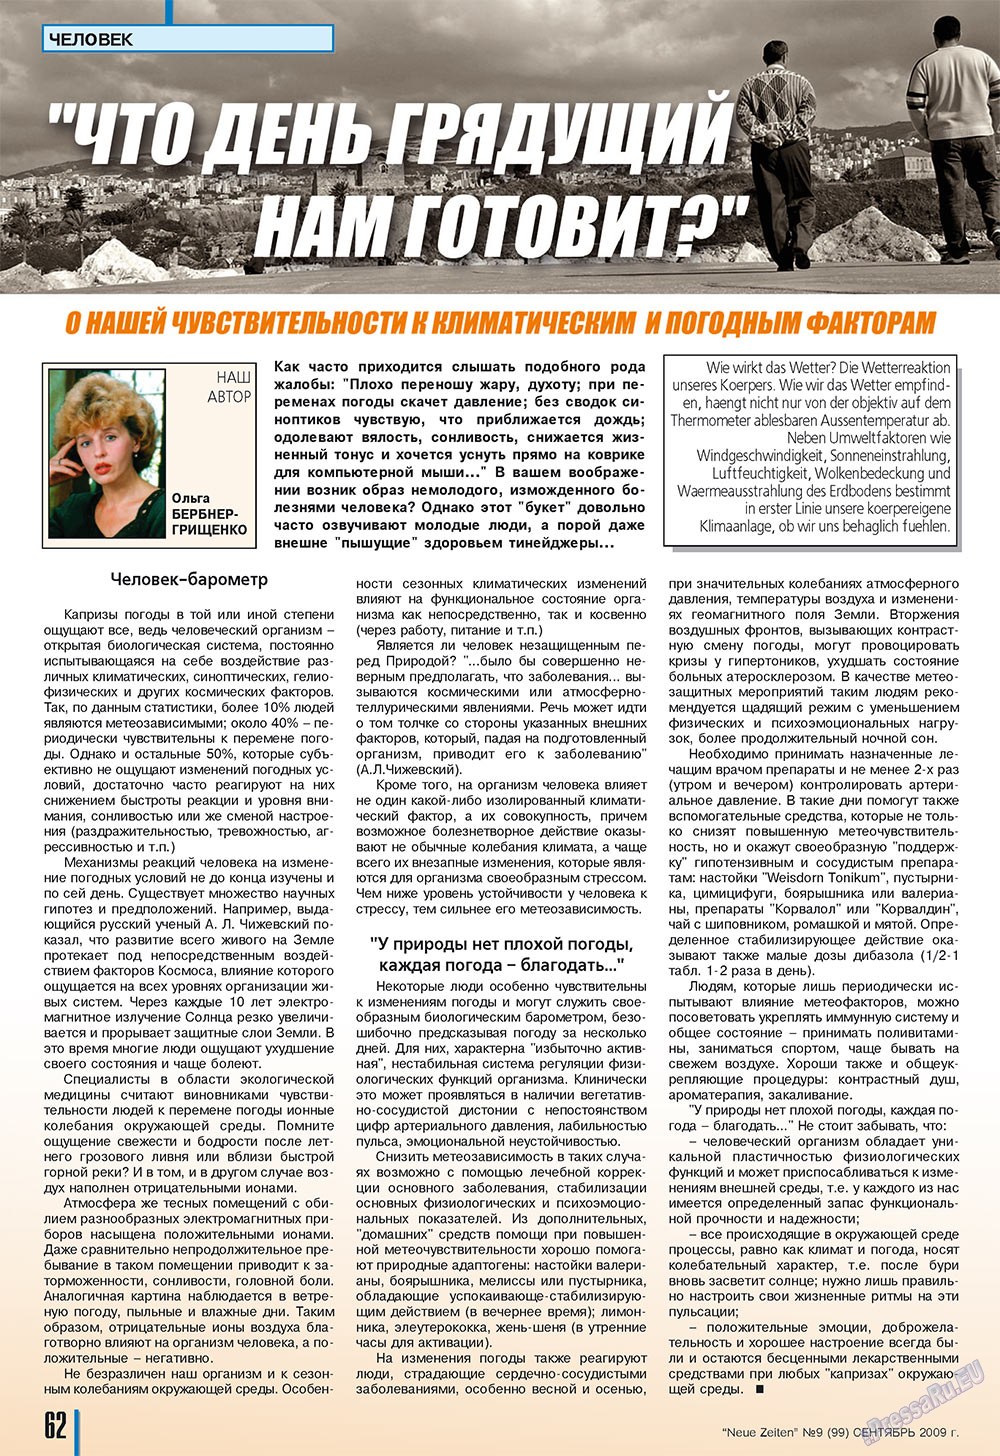 Neue Zeiten (журнал). 2009 год, номер 9, стр. 62